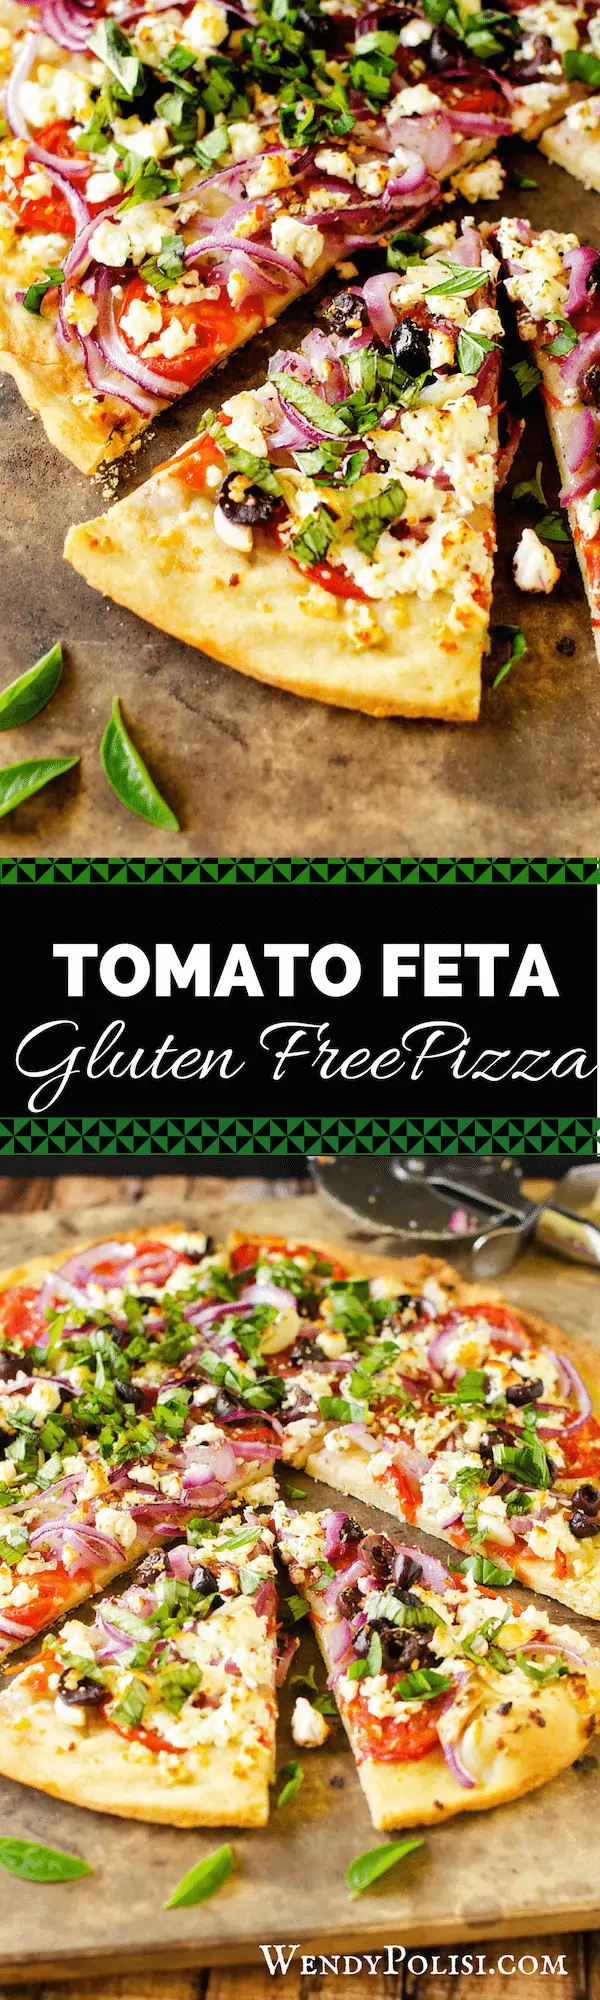 Tomato Feta Pizza with Quinoa Crust - Gluten Free with Vegan Option